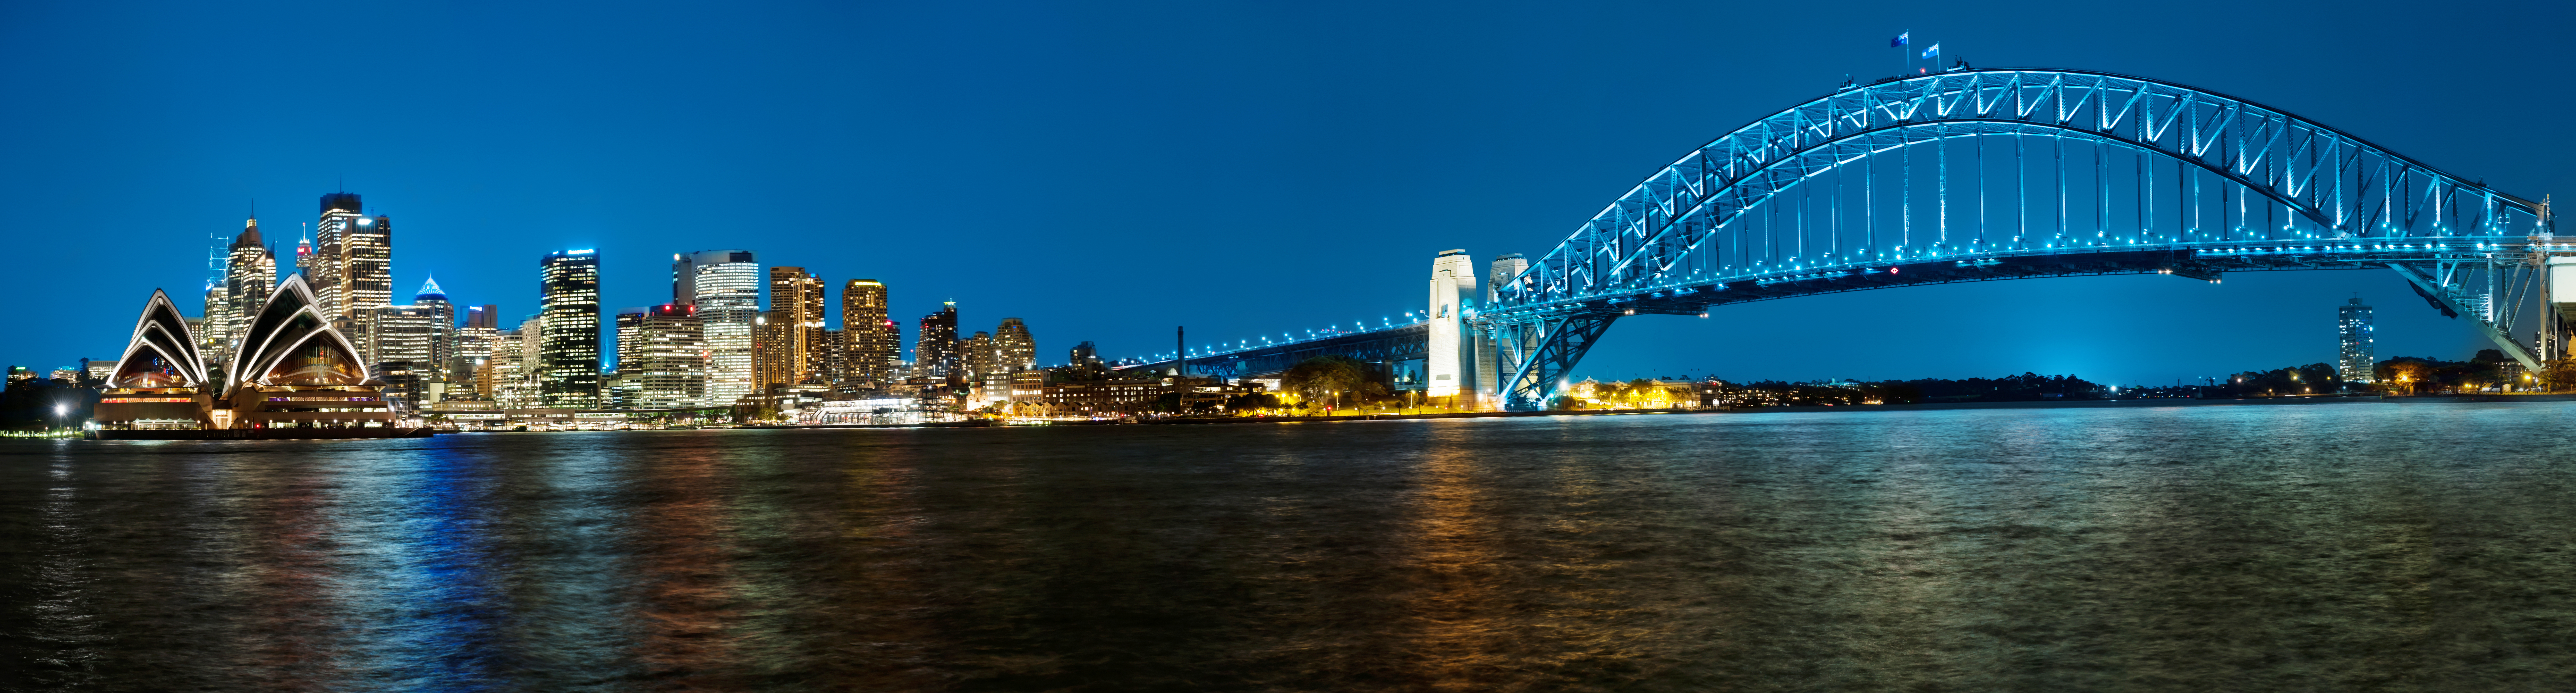 Sydney 4k Ultra HD Wallpaper